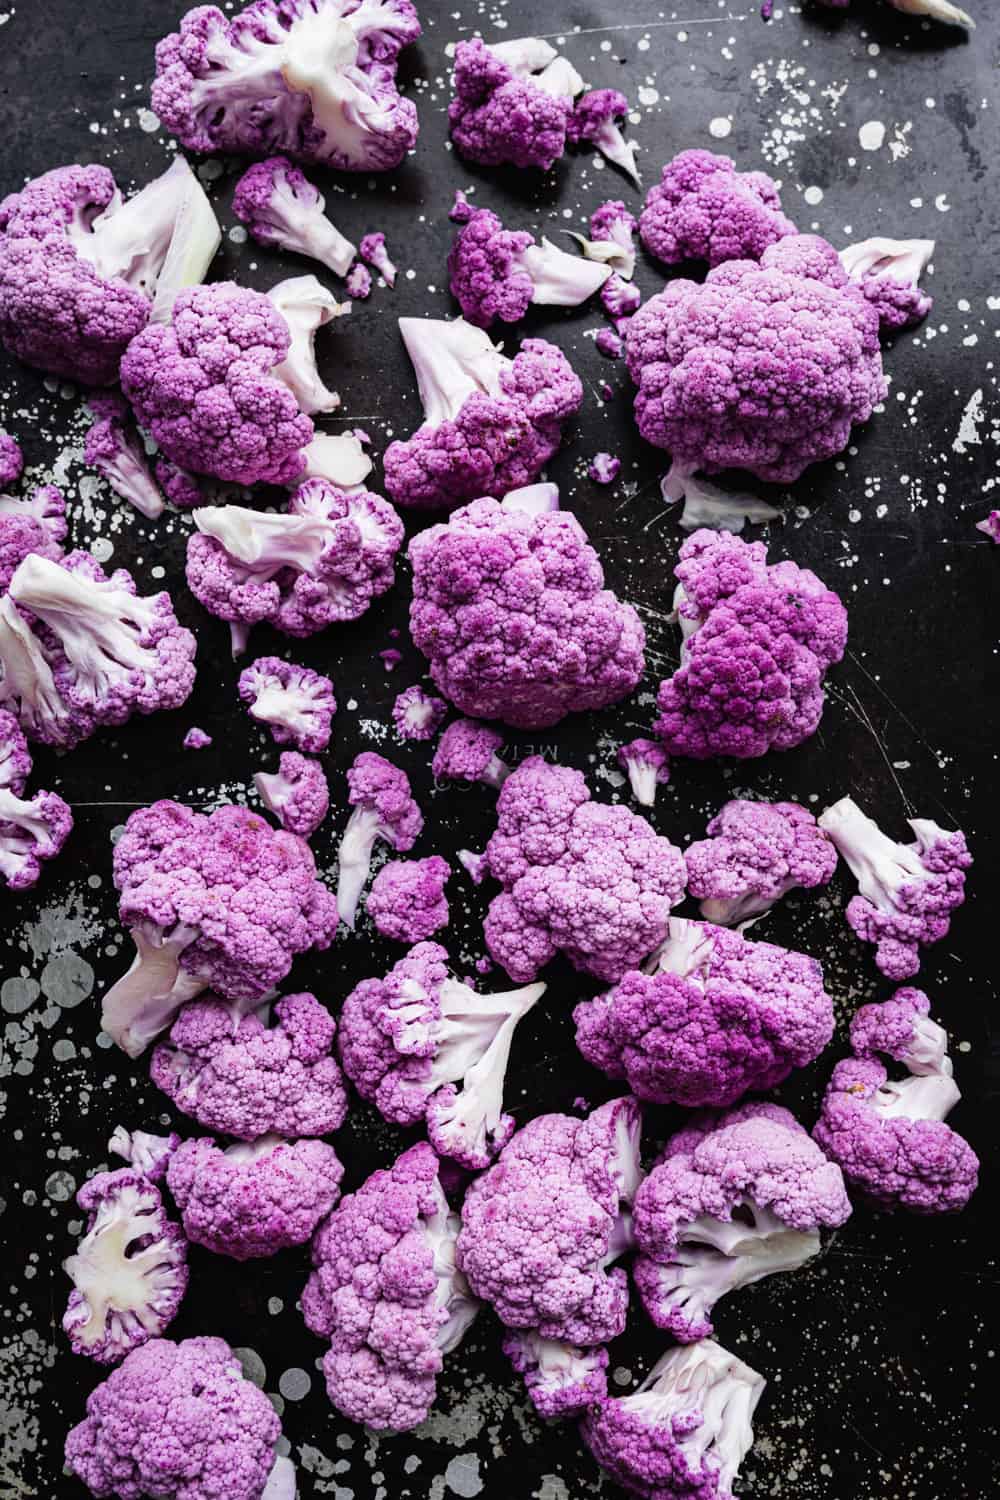 purple cauliflower florets on a black baking sheet